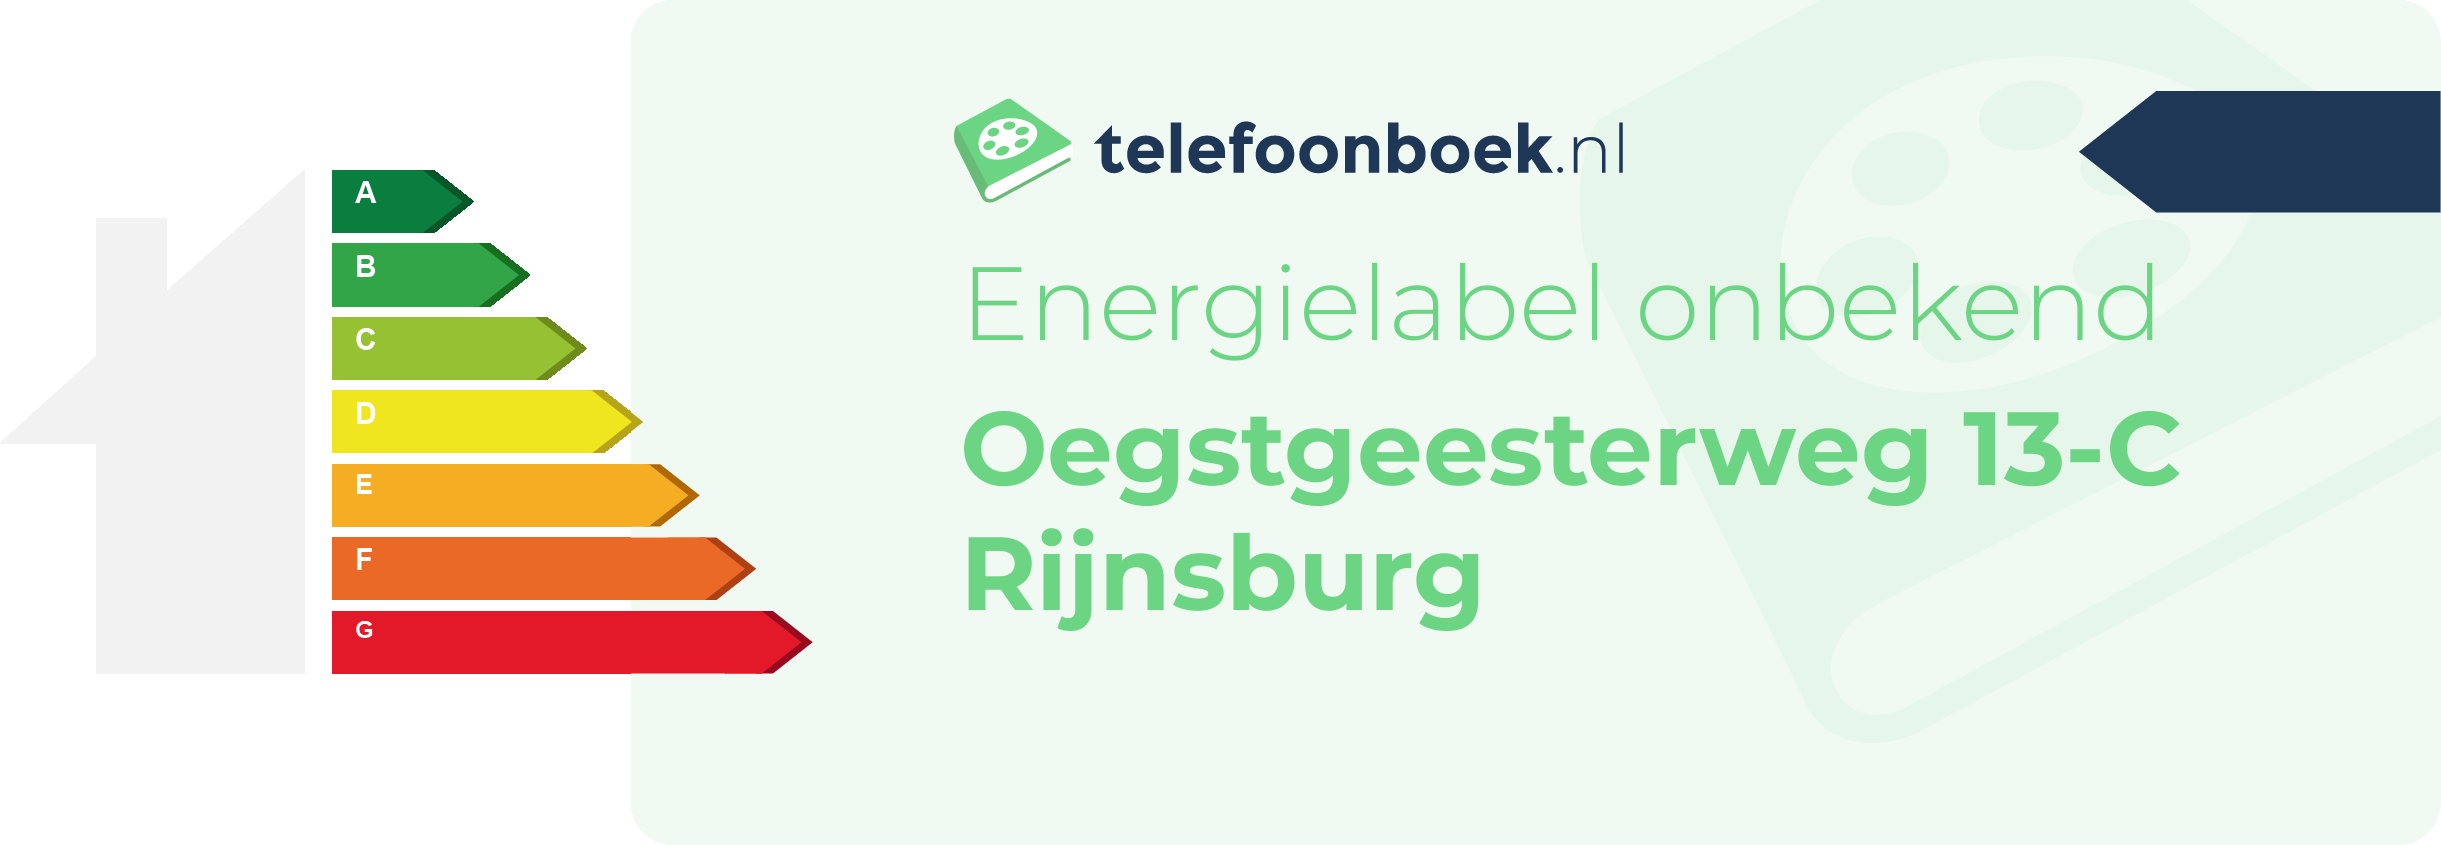 Energielabel Oegstgeesterweg 13-C Rijnsburg